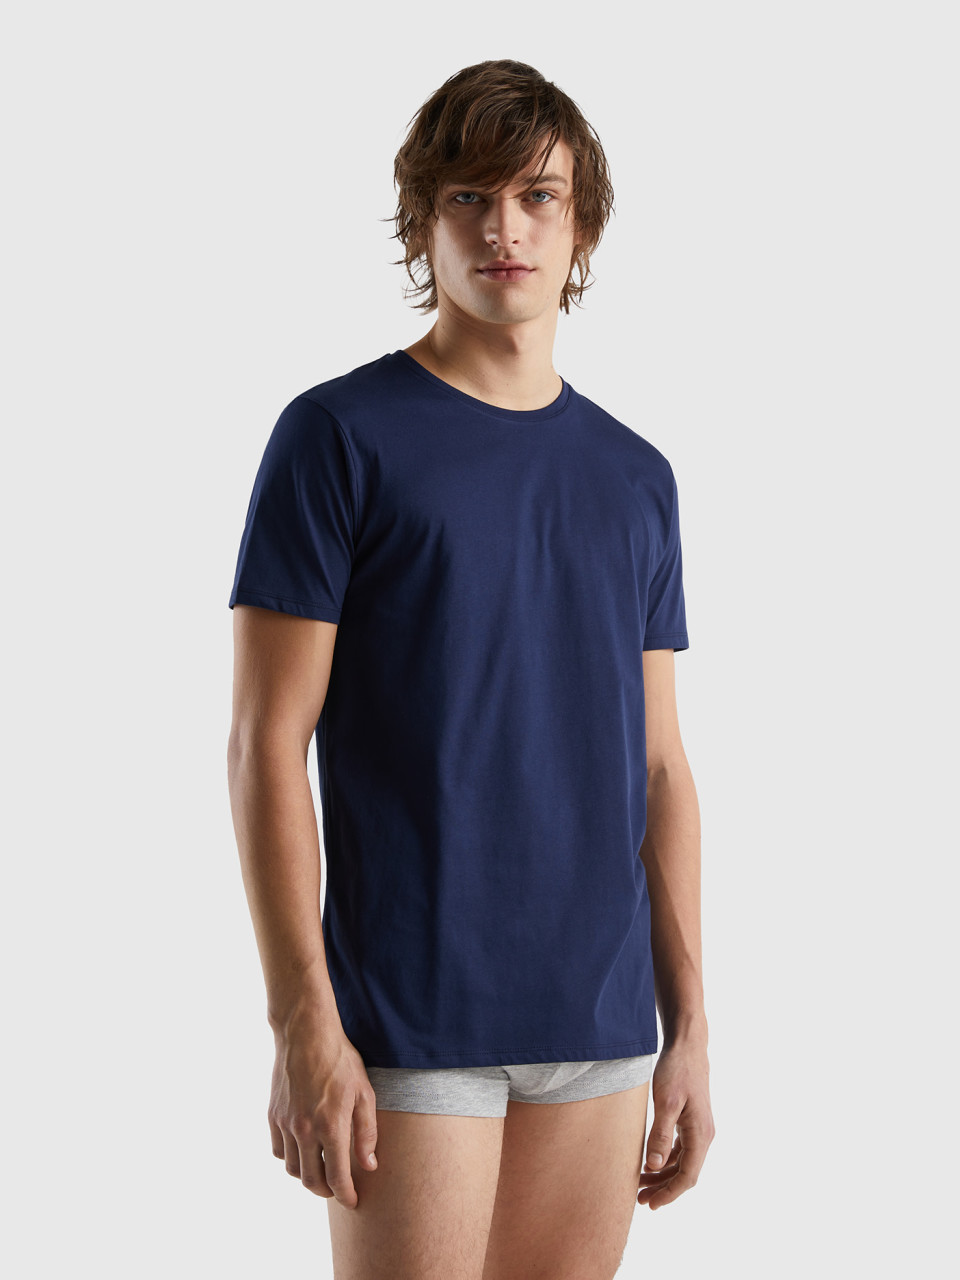 Benetton, T-shirt In Cotone A Fibra Lunga, Blu Scuro, Uomo